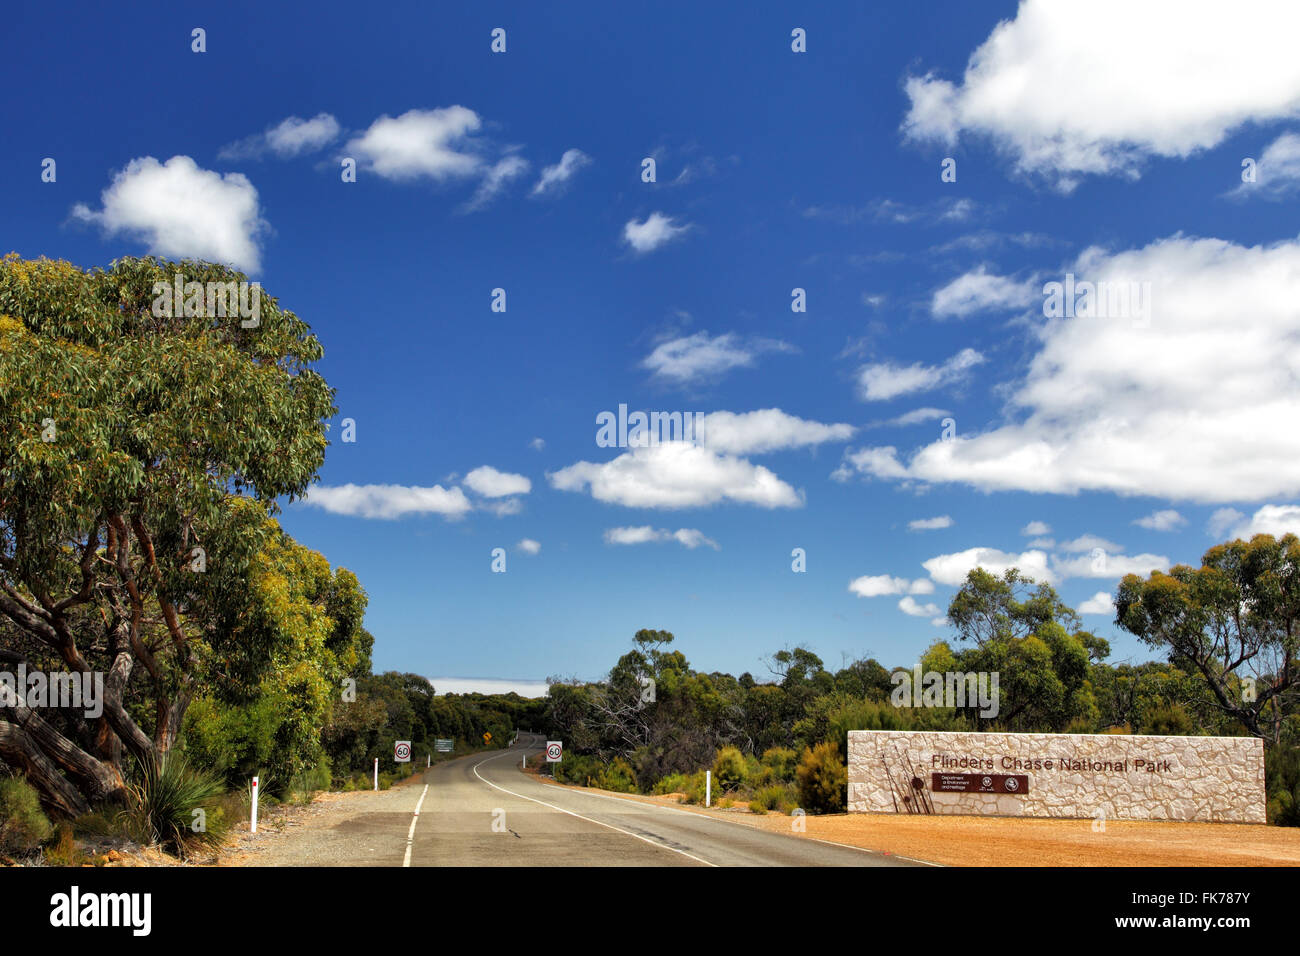 Ingresso al Parco Nazionale di Flinders Chase su Kangaroo Island, South Australia, Australia. Foto Stock